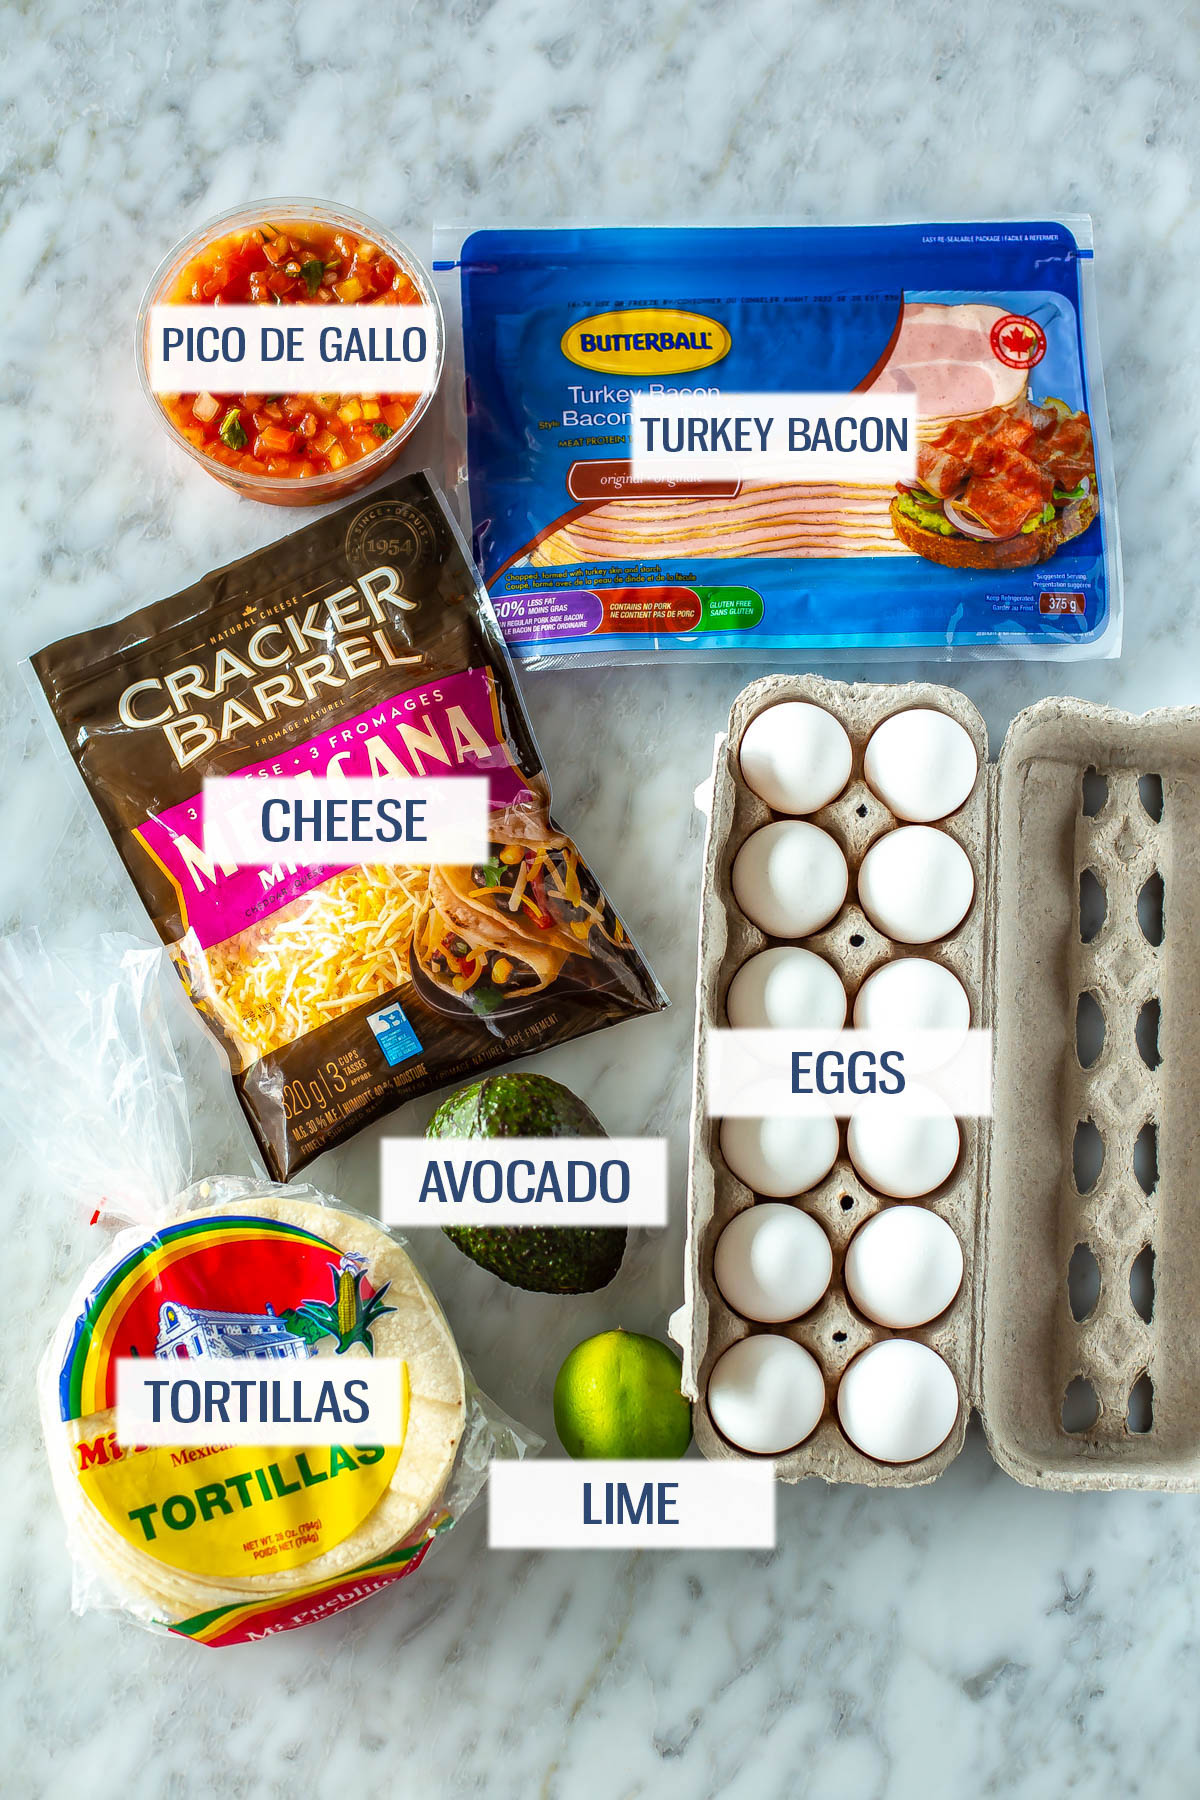 Ingredients for breakfast tacos: pico de gallo, turkey bacon, cheese, eggs, avocado, tortillas, and lime. 